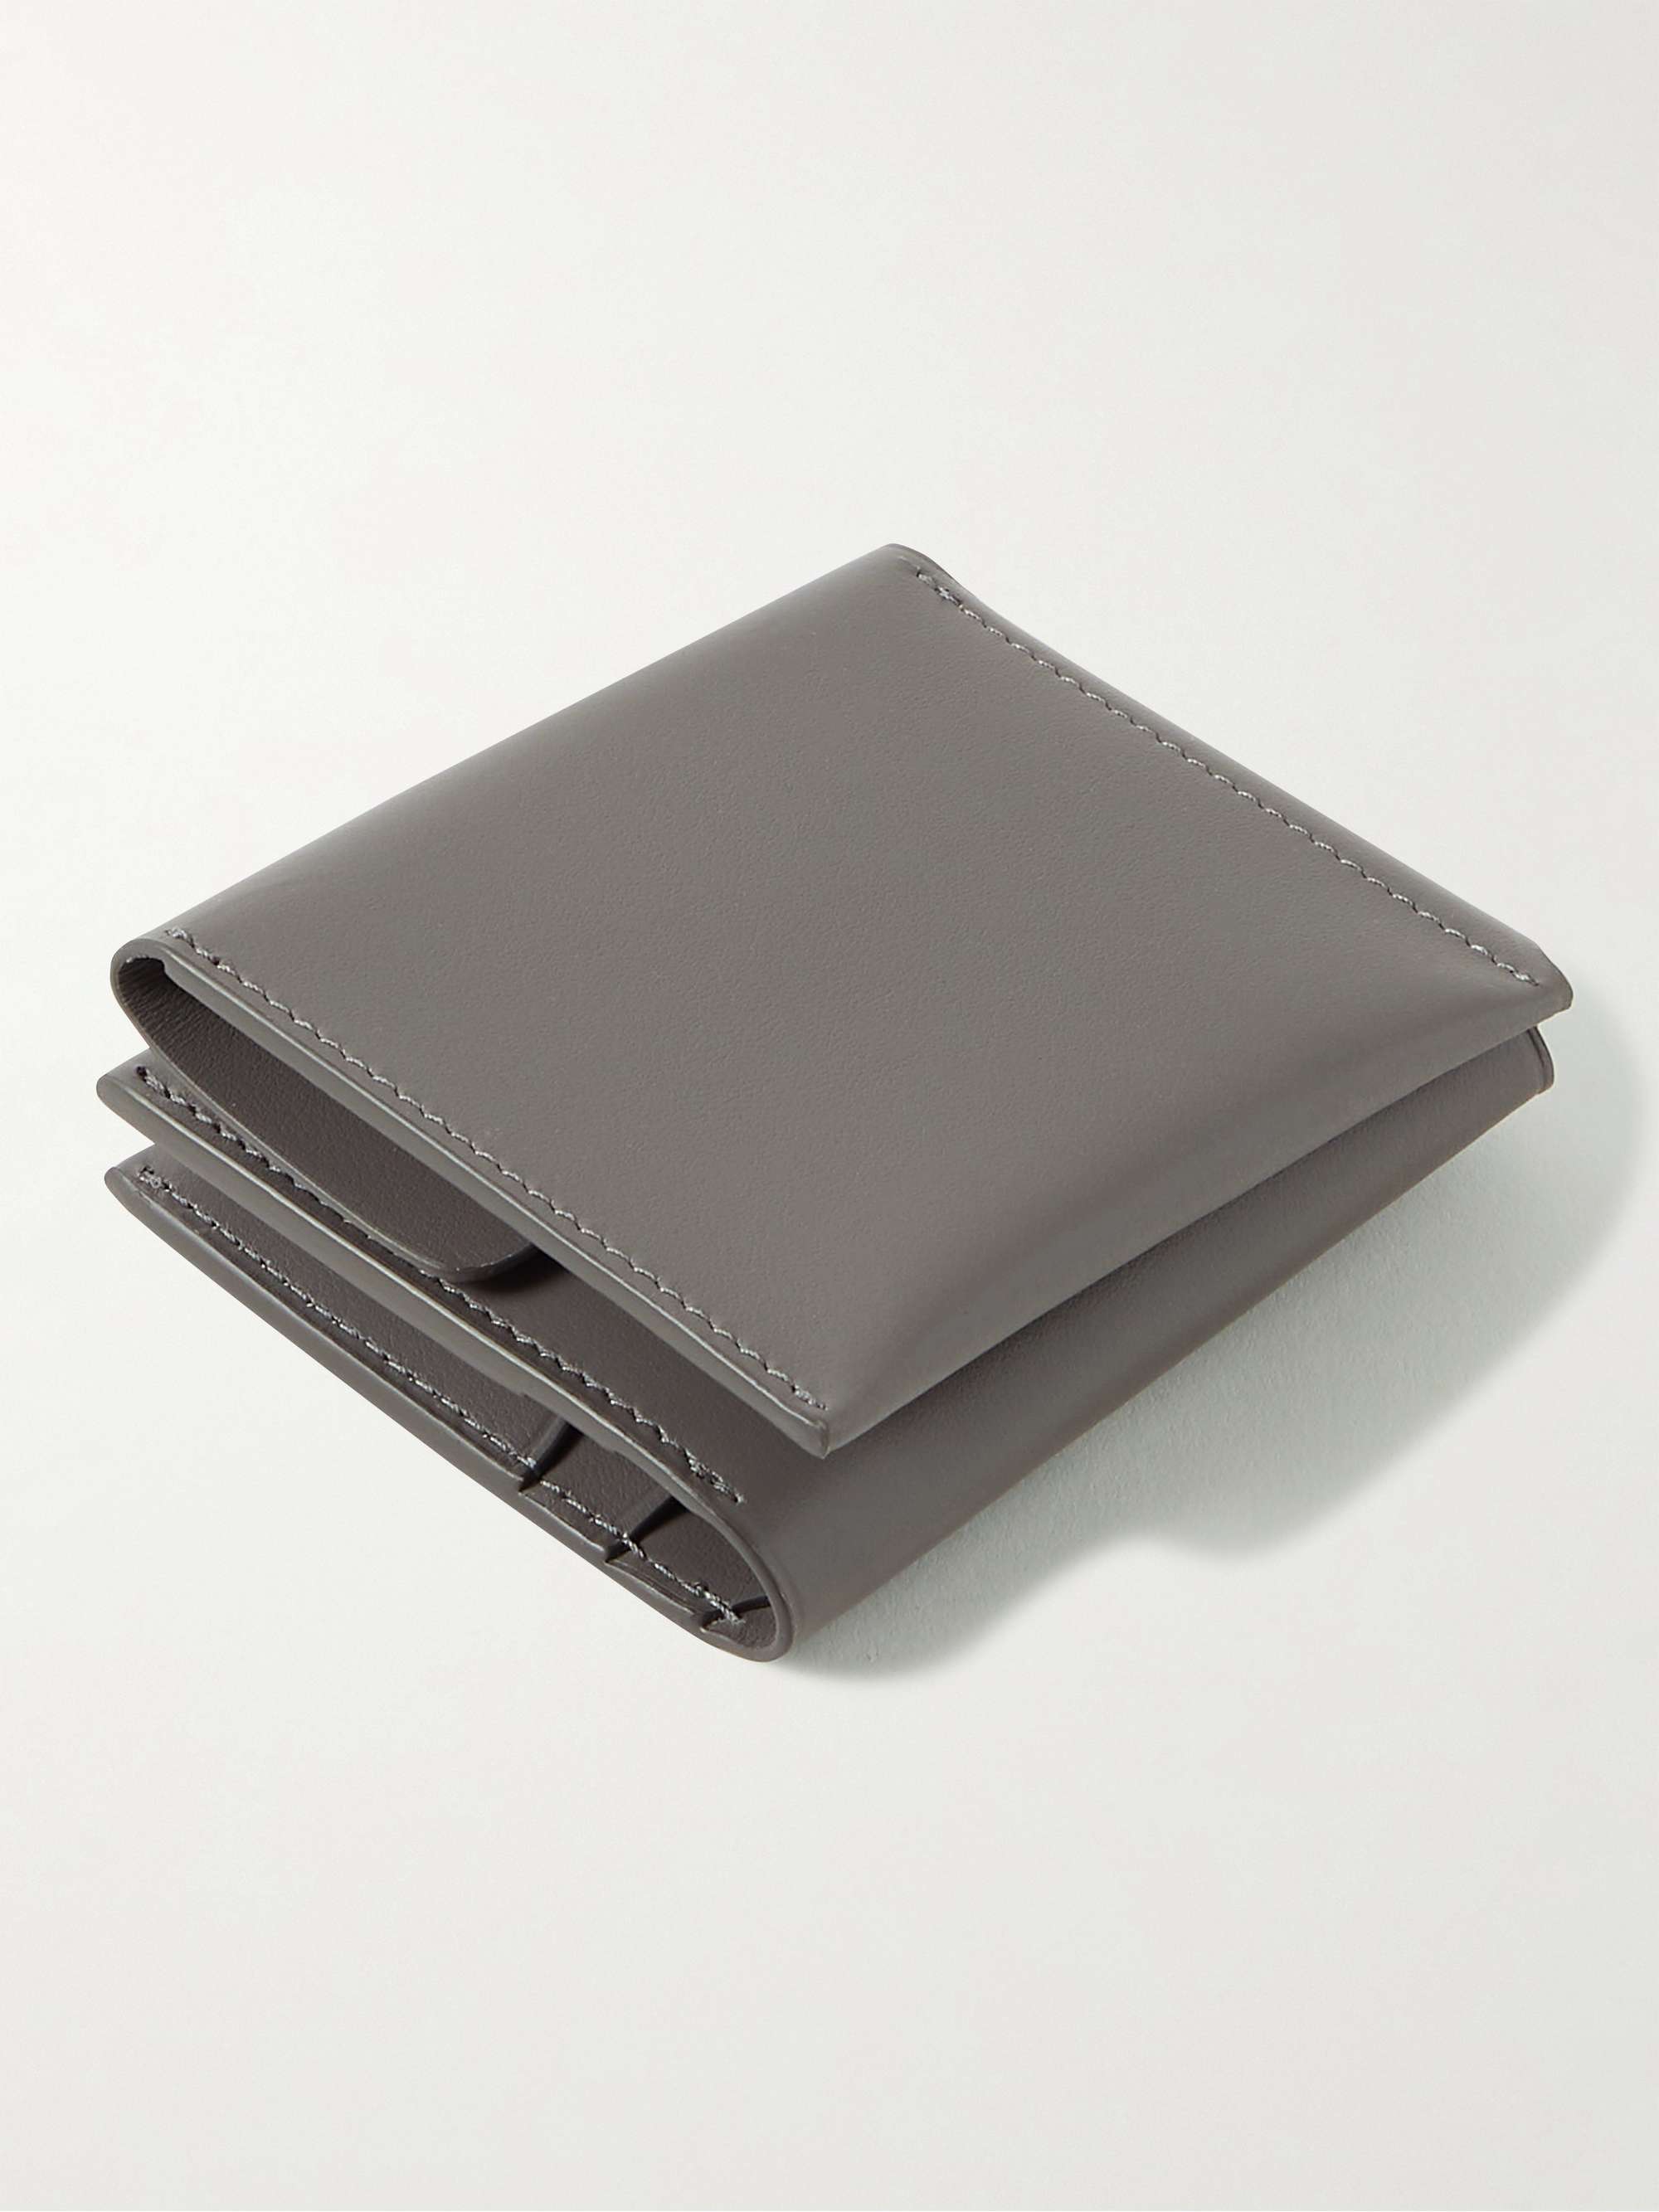 ACNE STUDIOS Logo-Print Leather Trifold Wallet